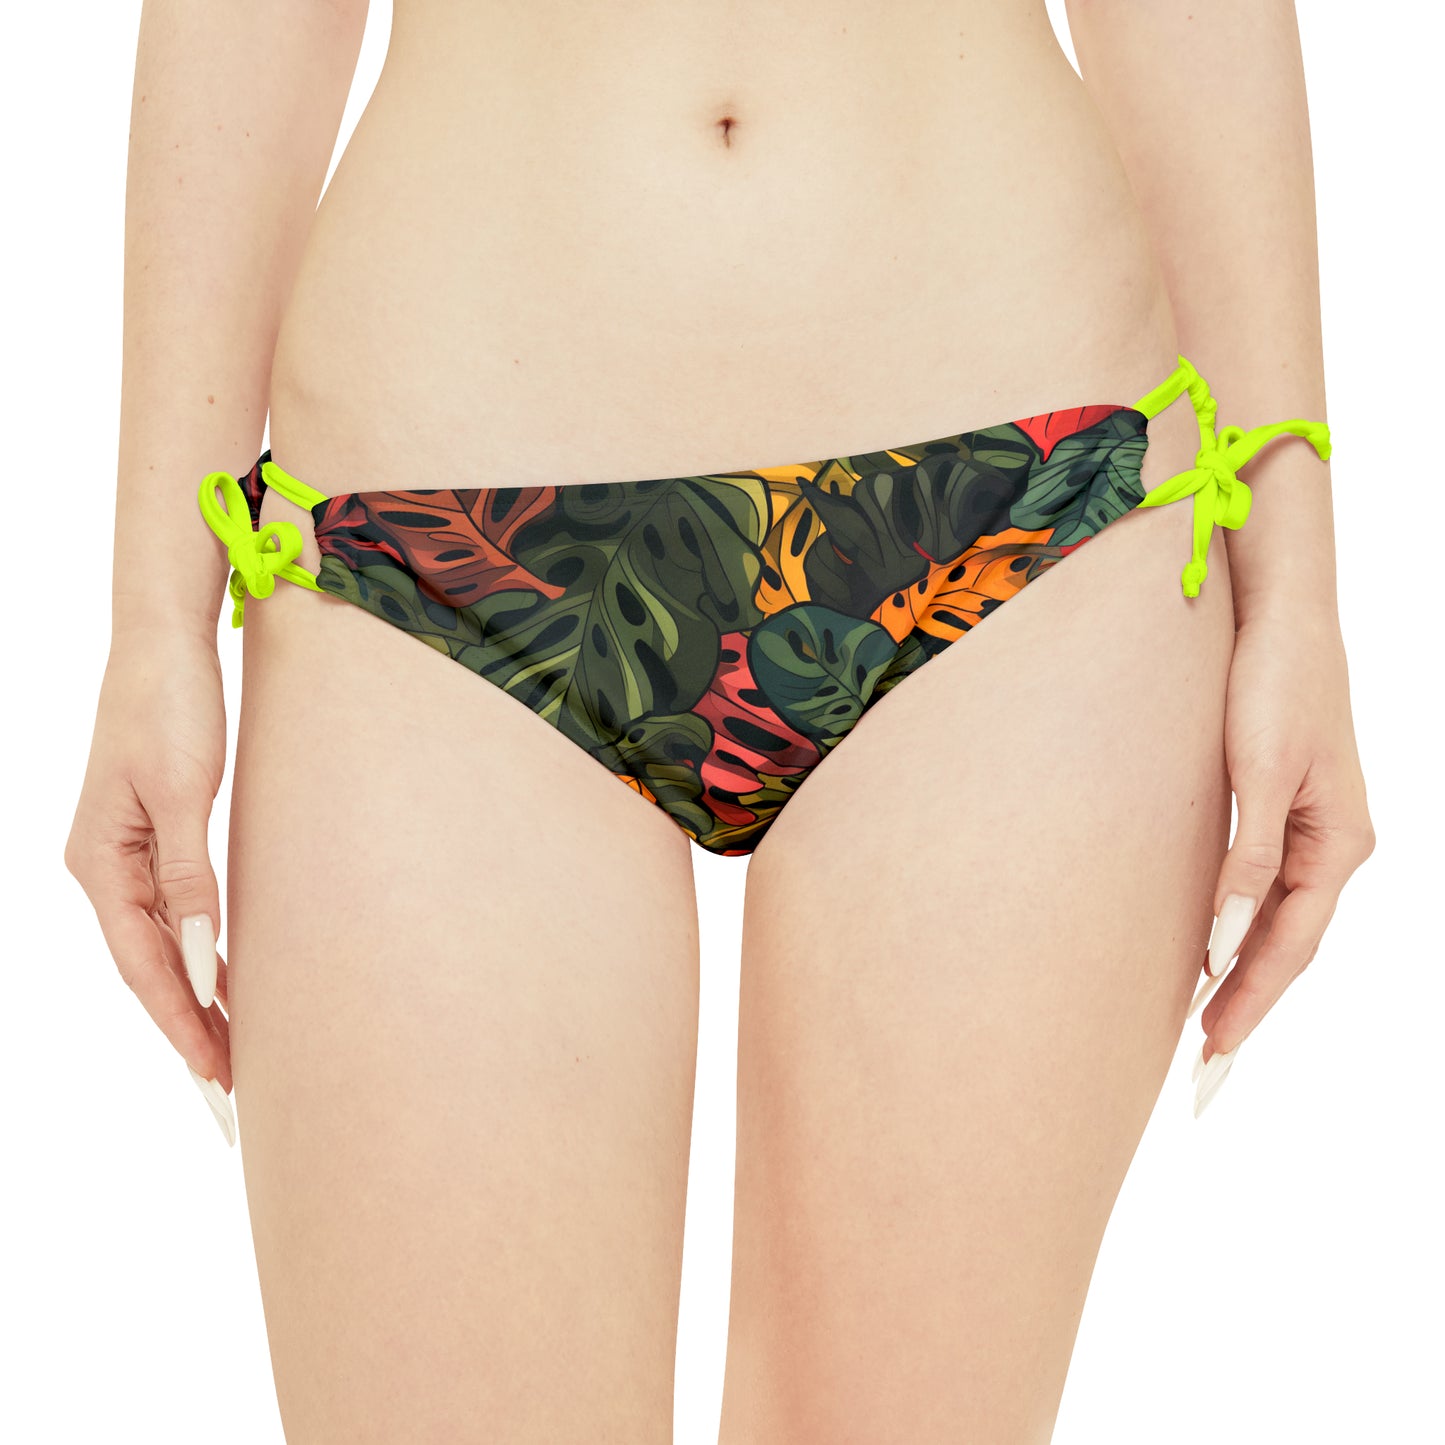 Jungle Camo Strappy Bikini Set